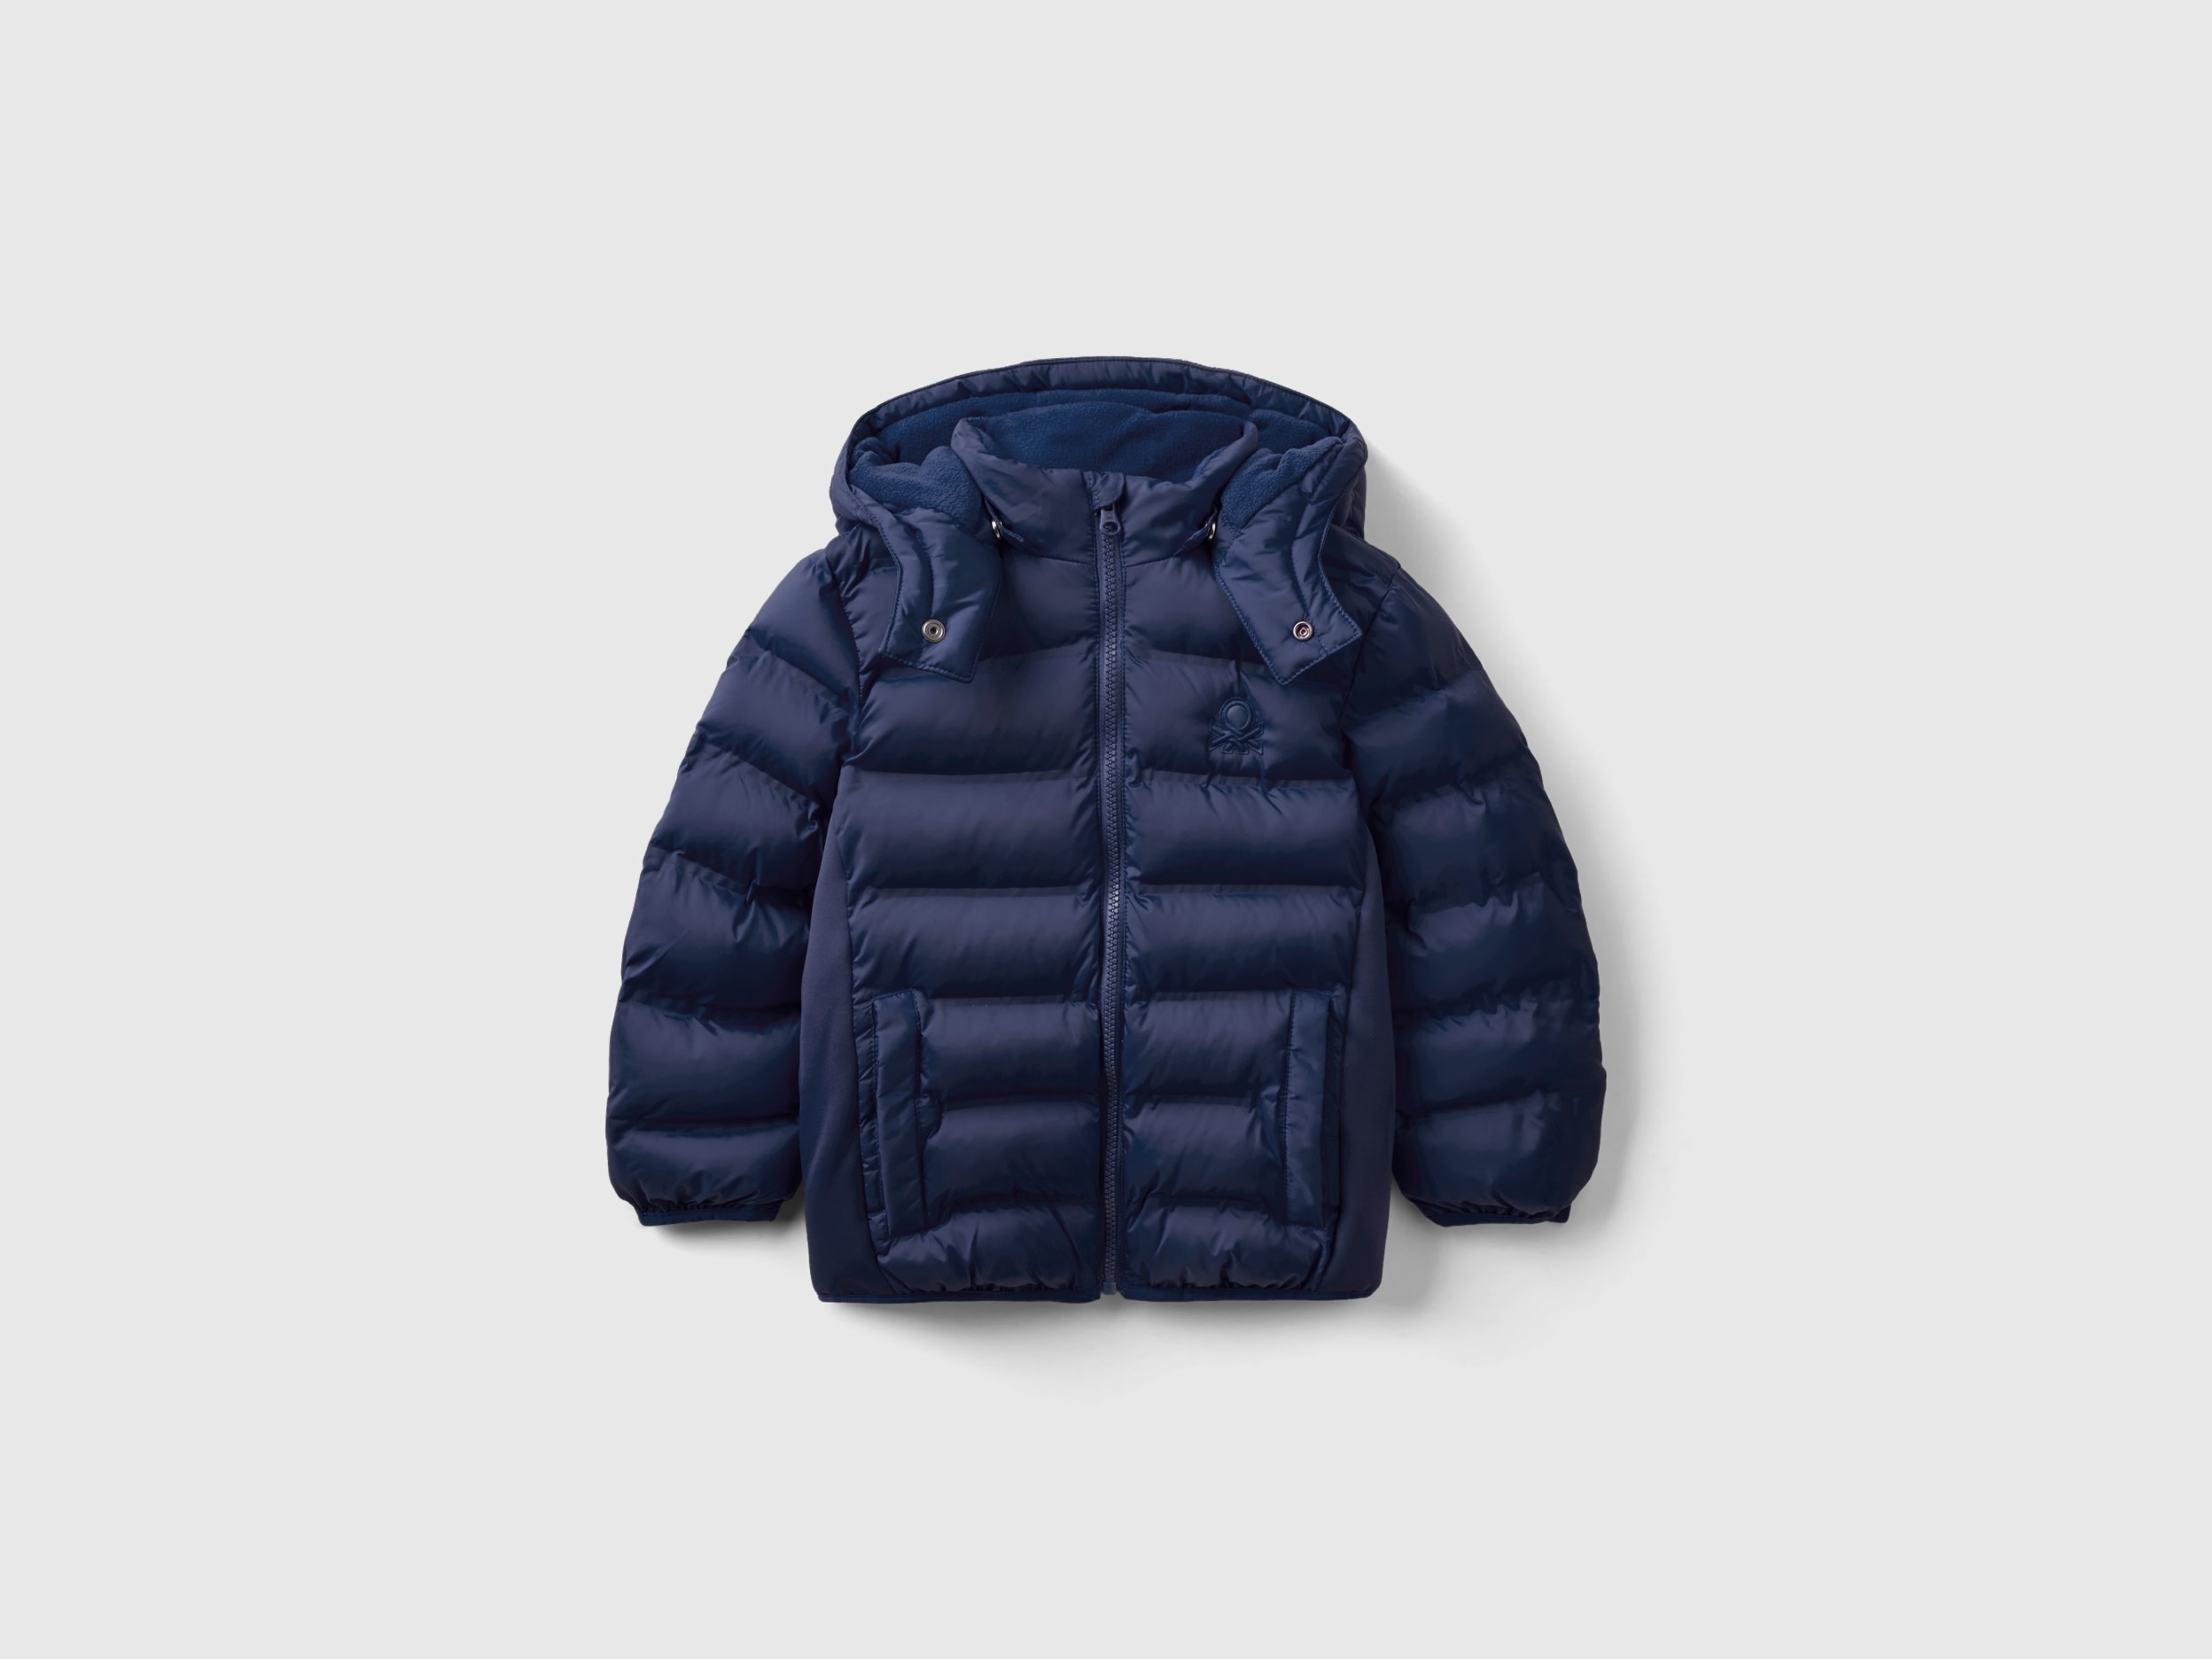 Benetton, Jacket With Neoprene Details, size 4-5, Dark Blue, Kids